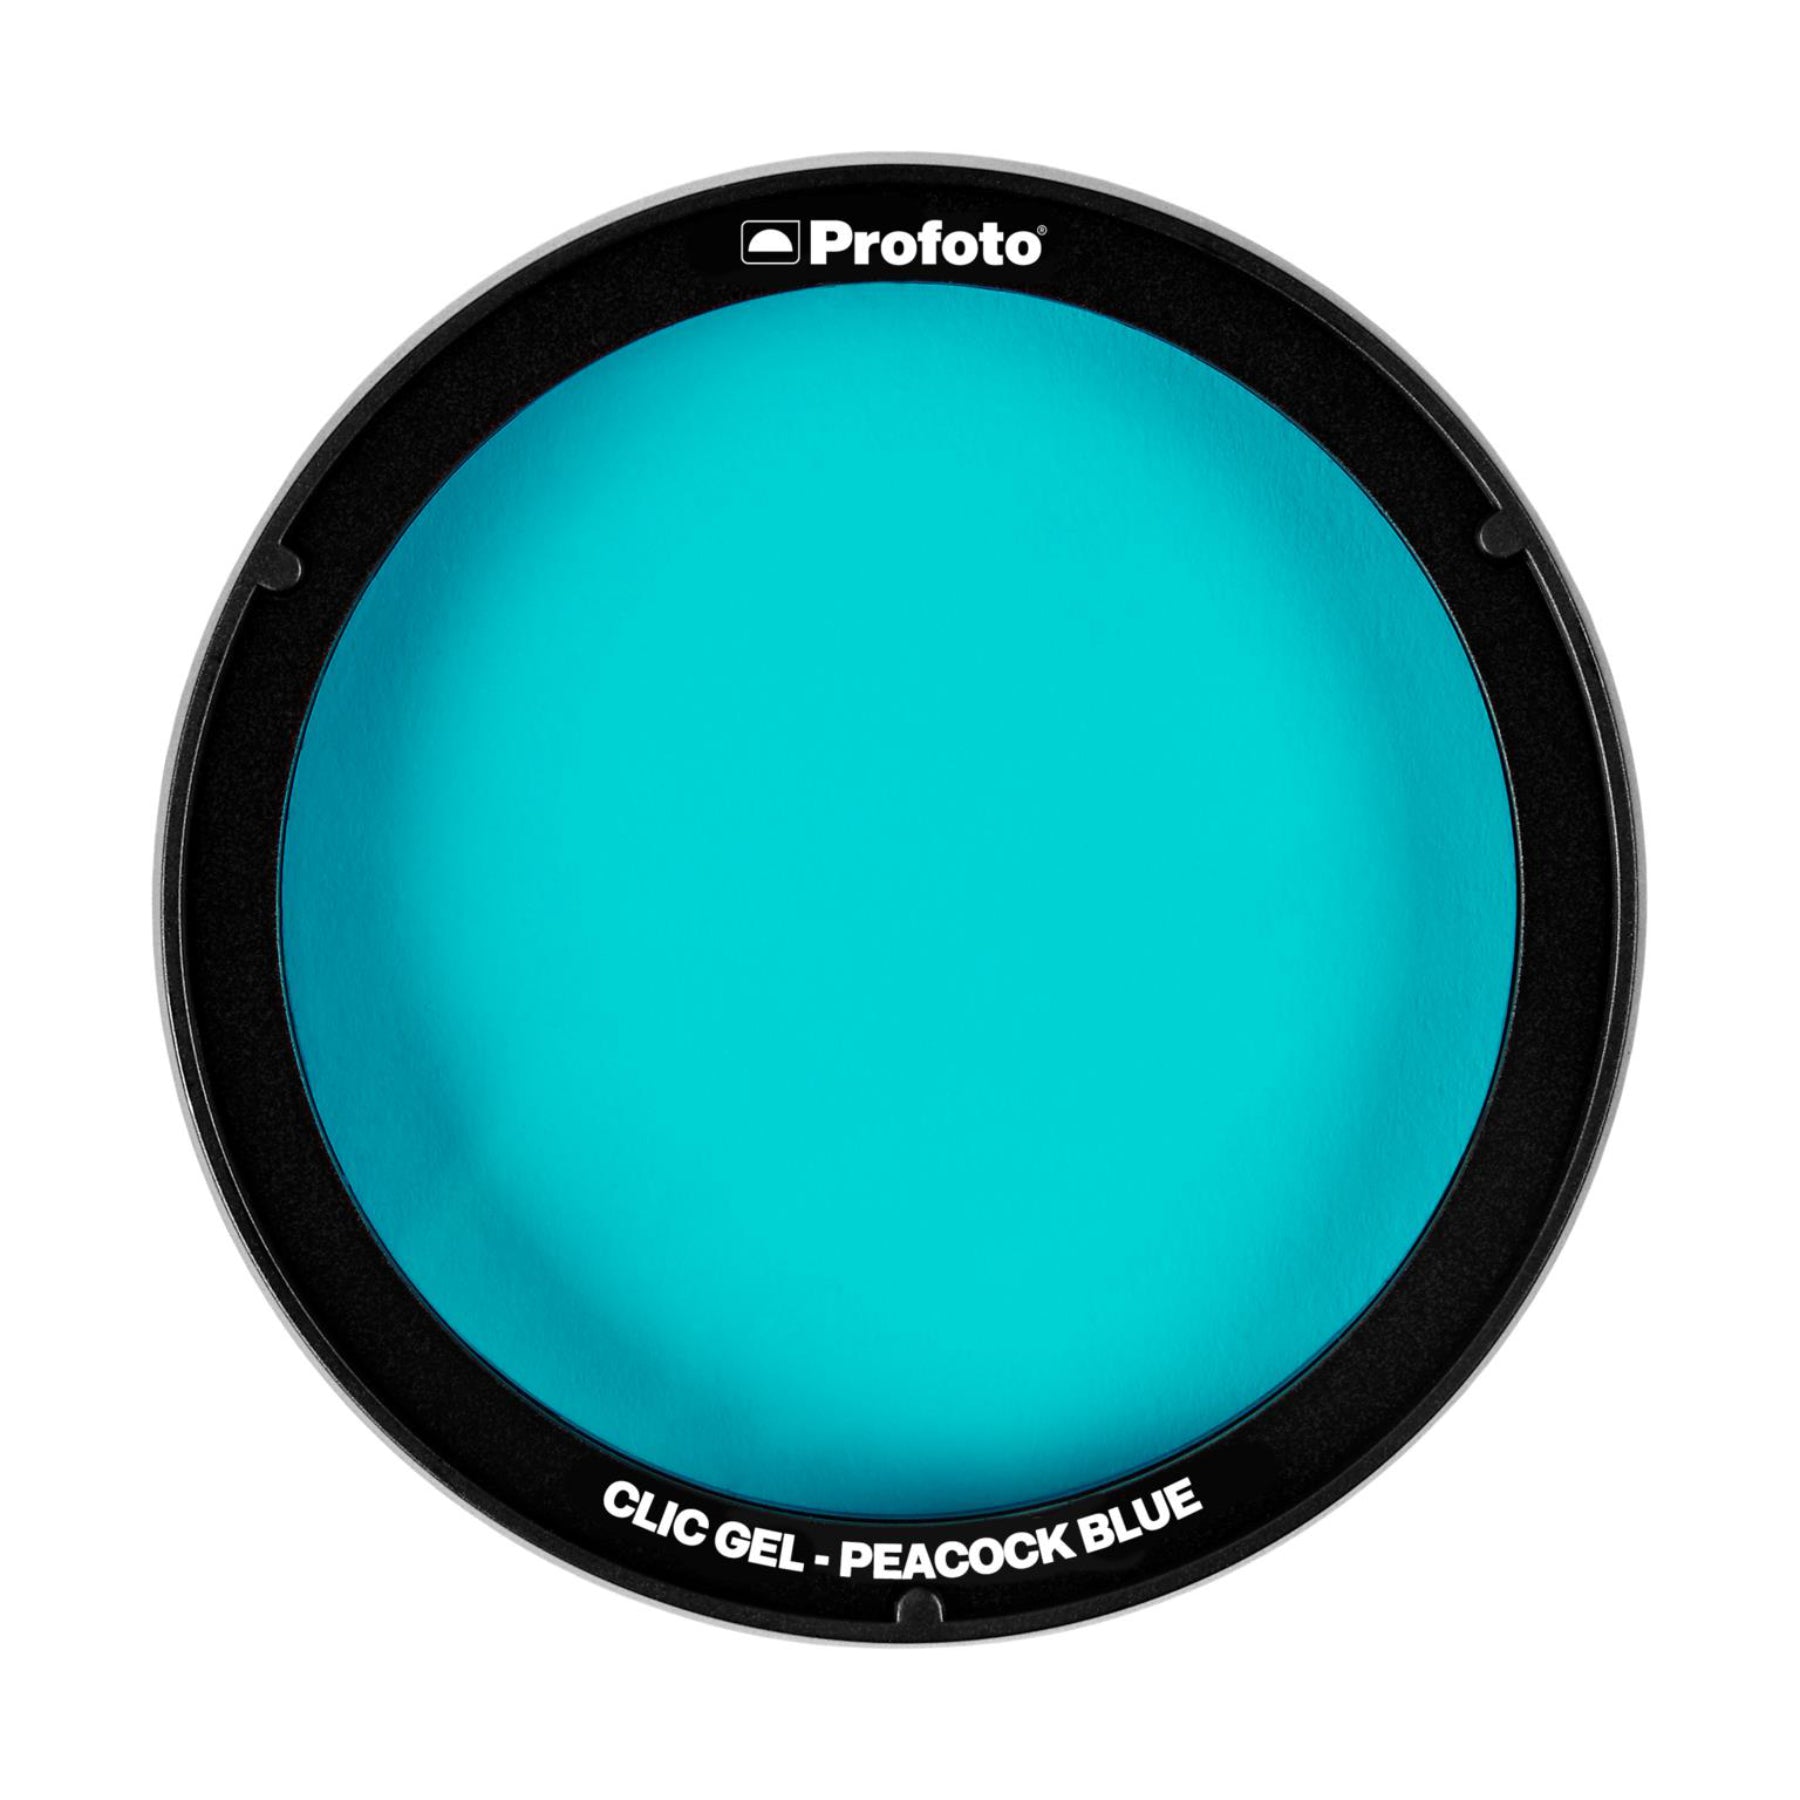 Hire Profoto Clic Gel for A10 Flash - Peacock Blue at Topic Rentals